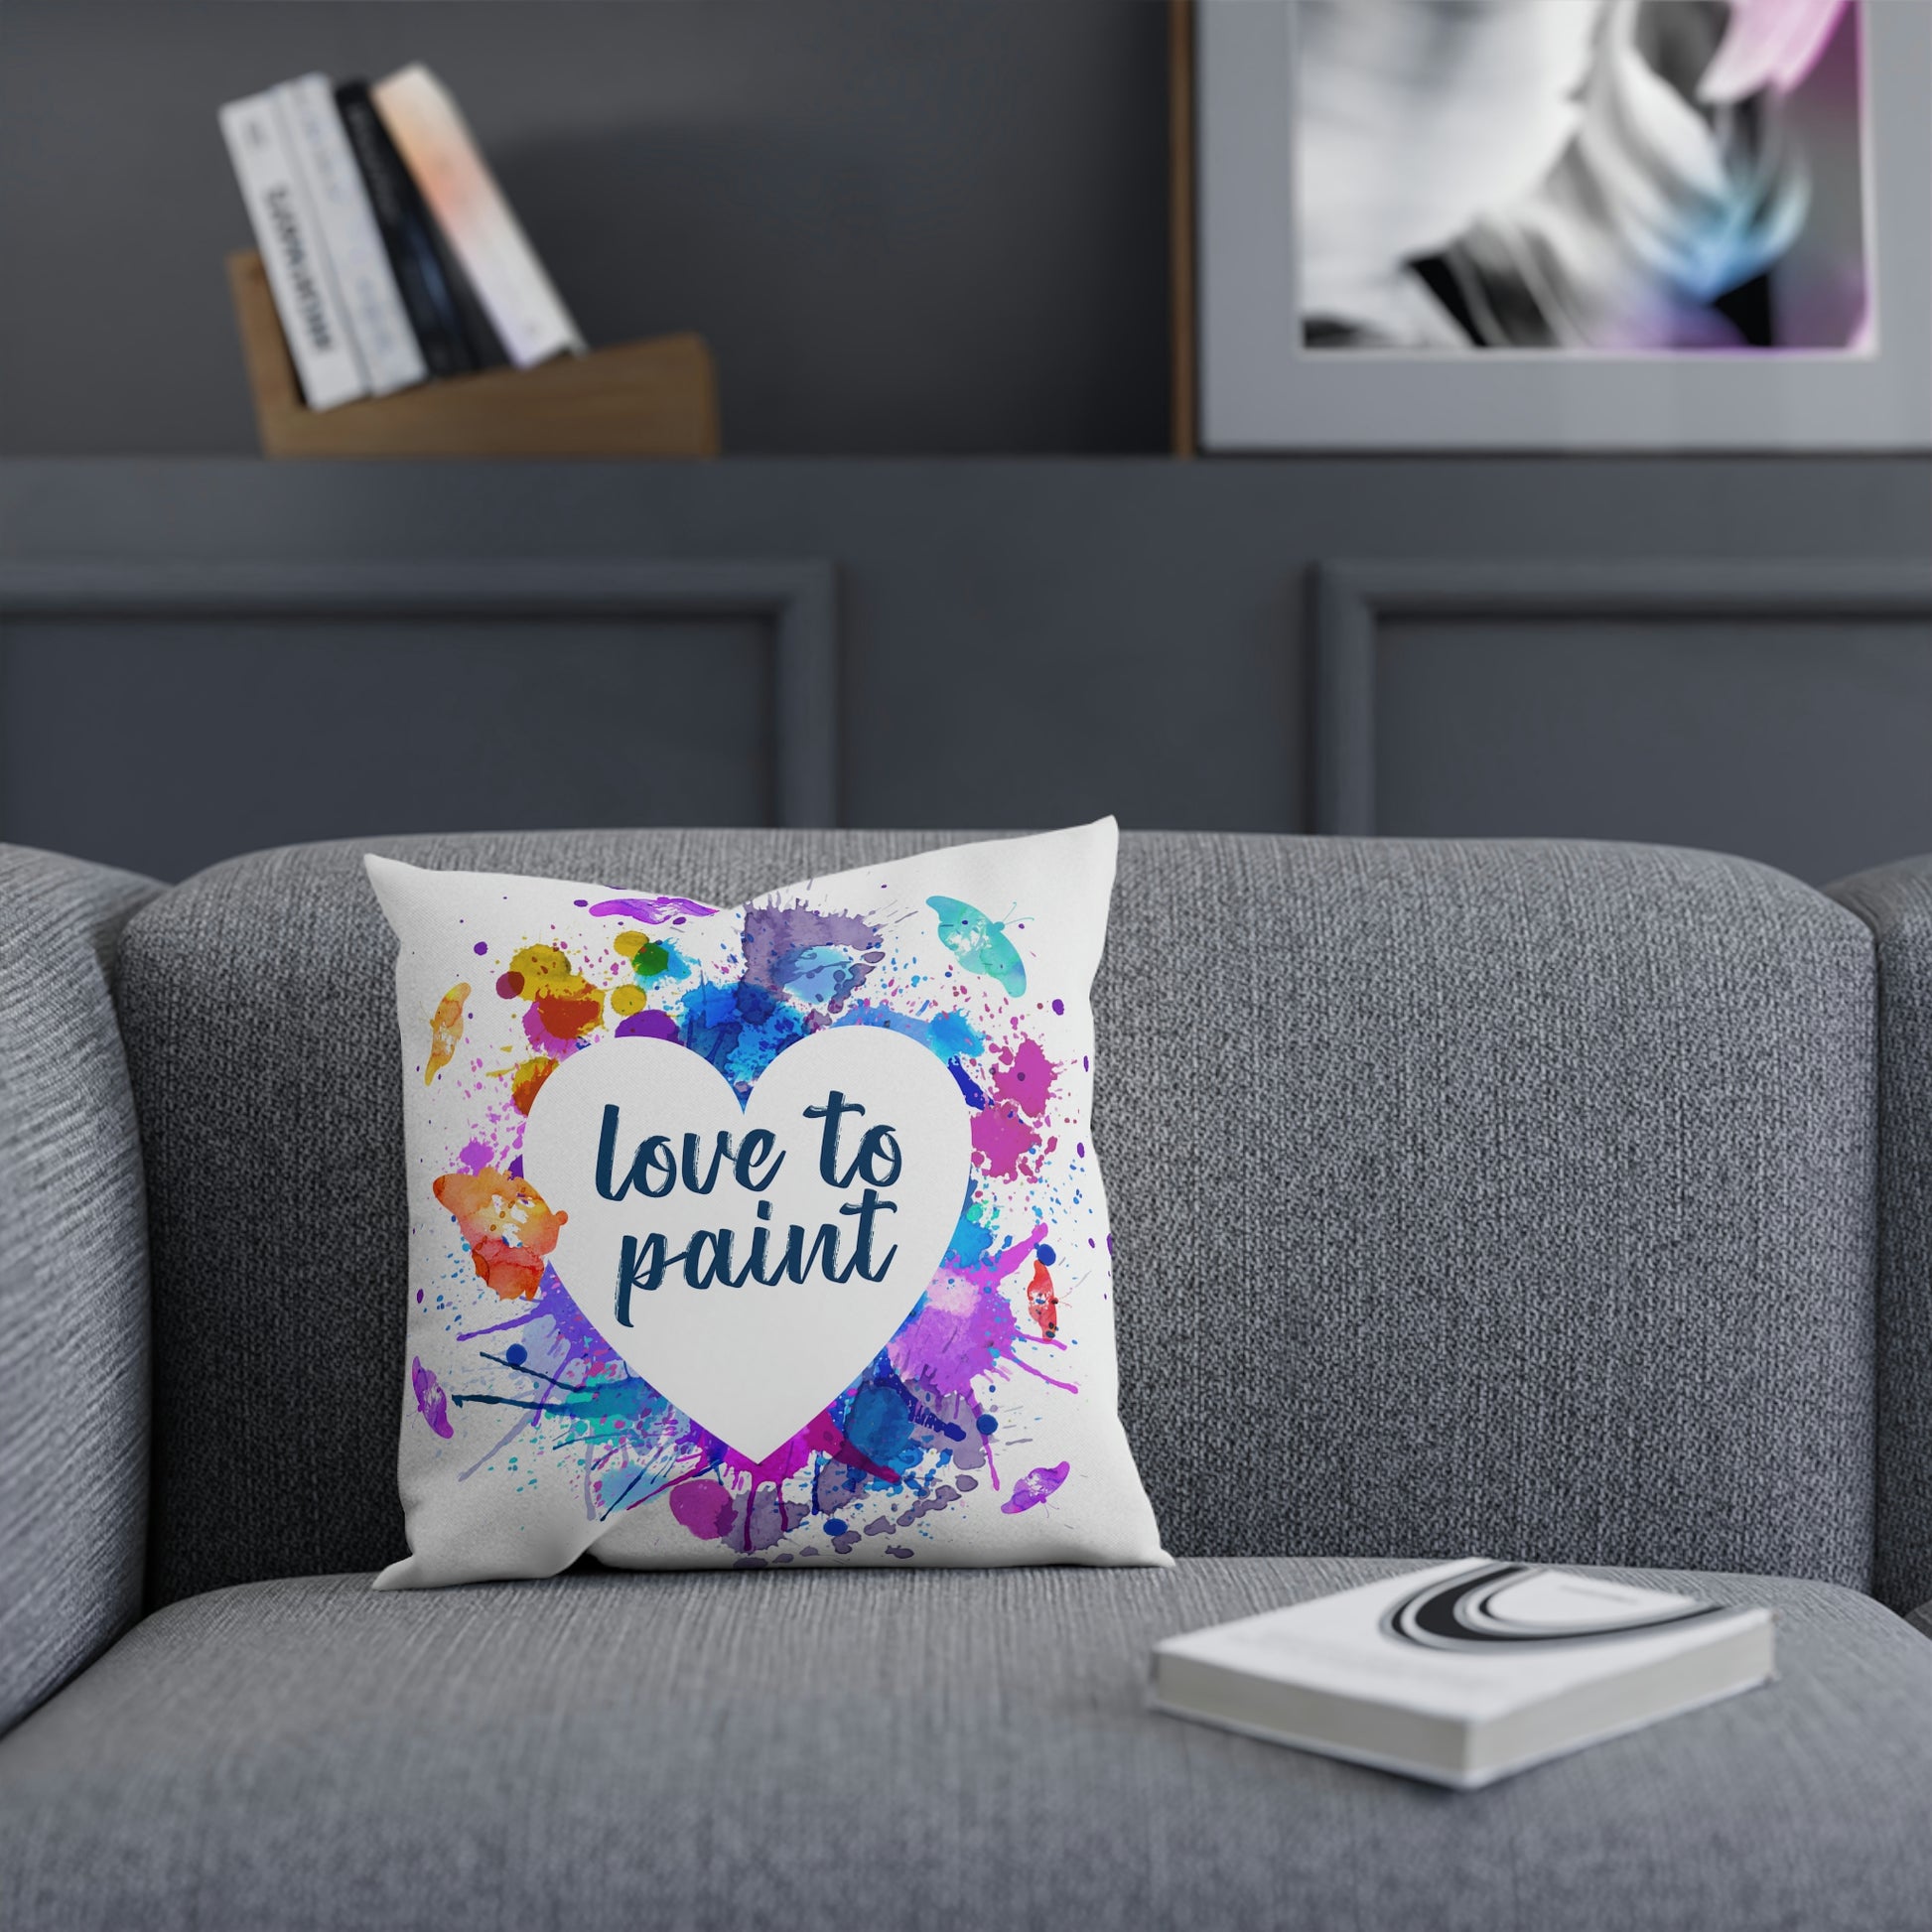 Love to paint - Cushion - HobbyMeFree